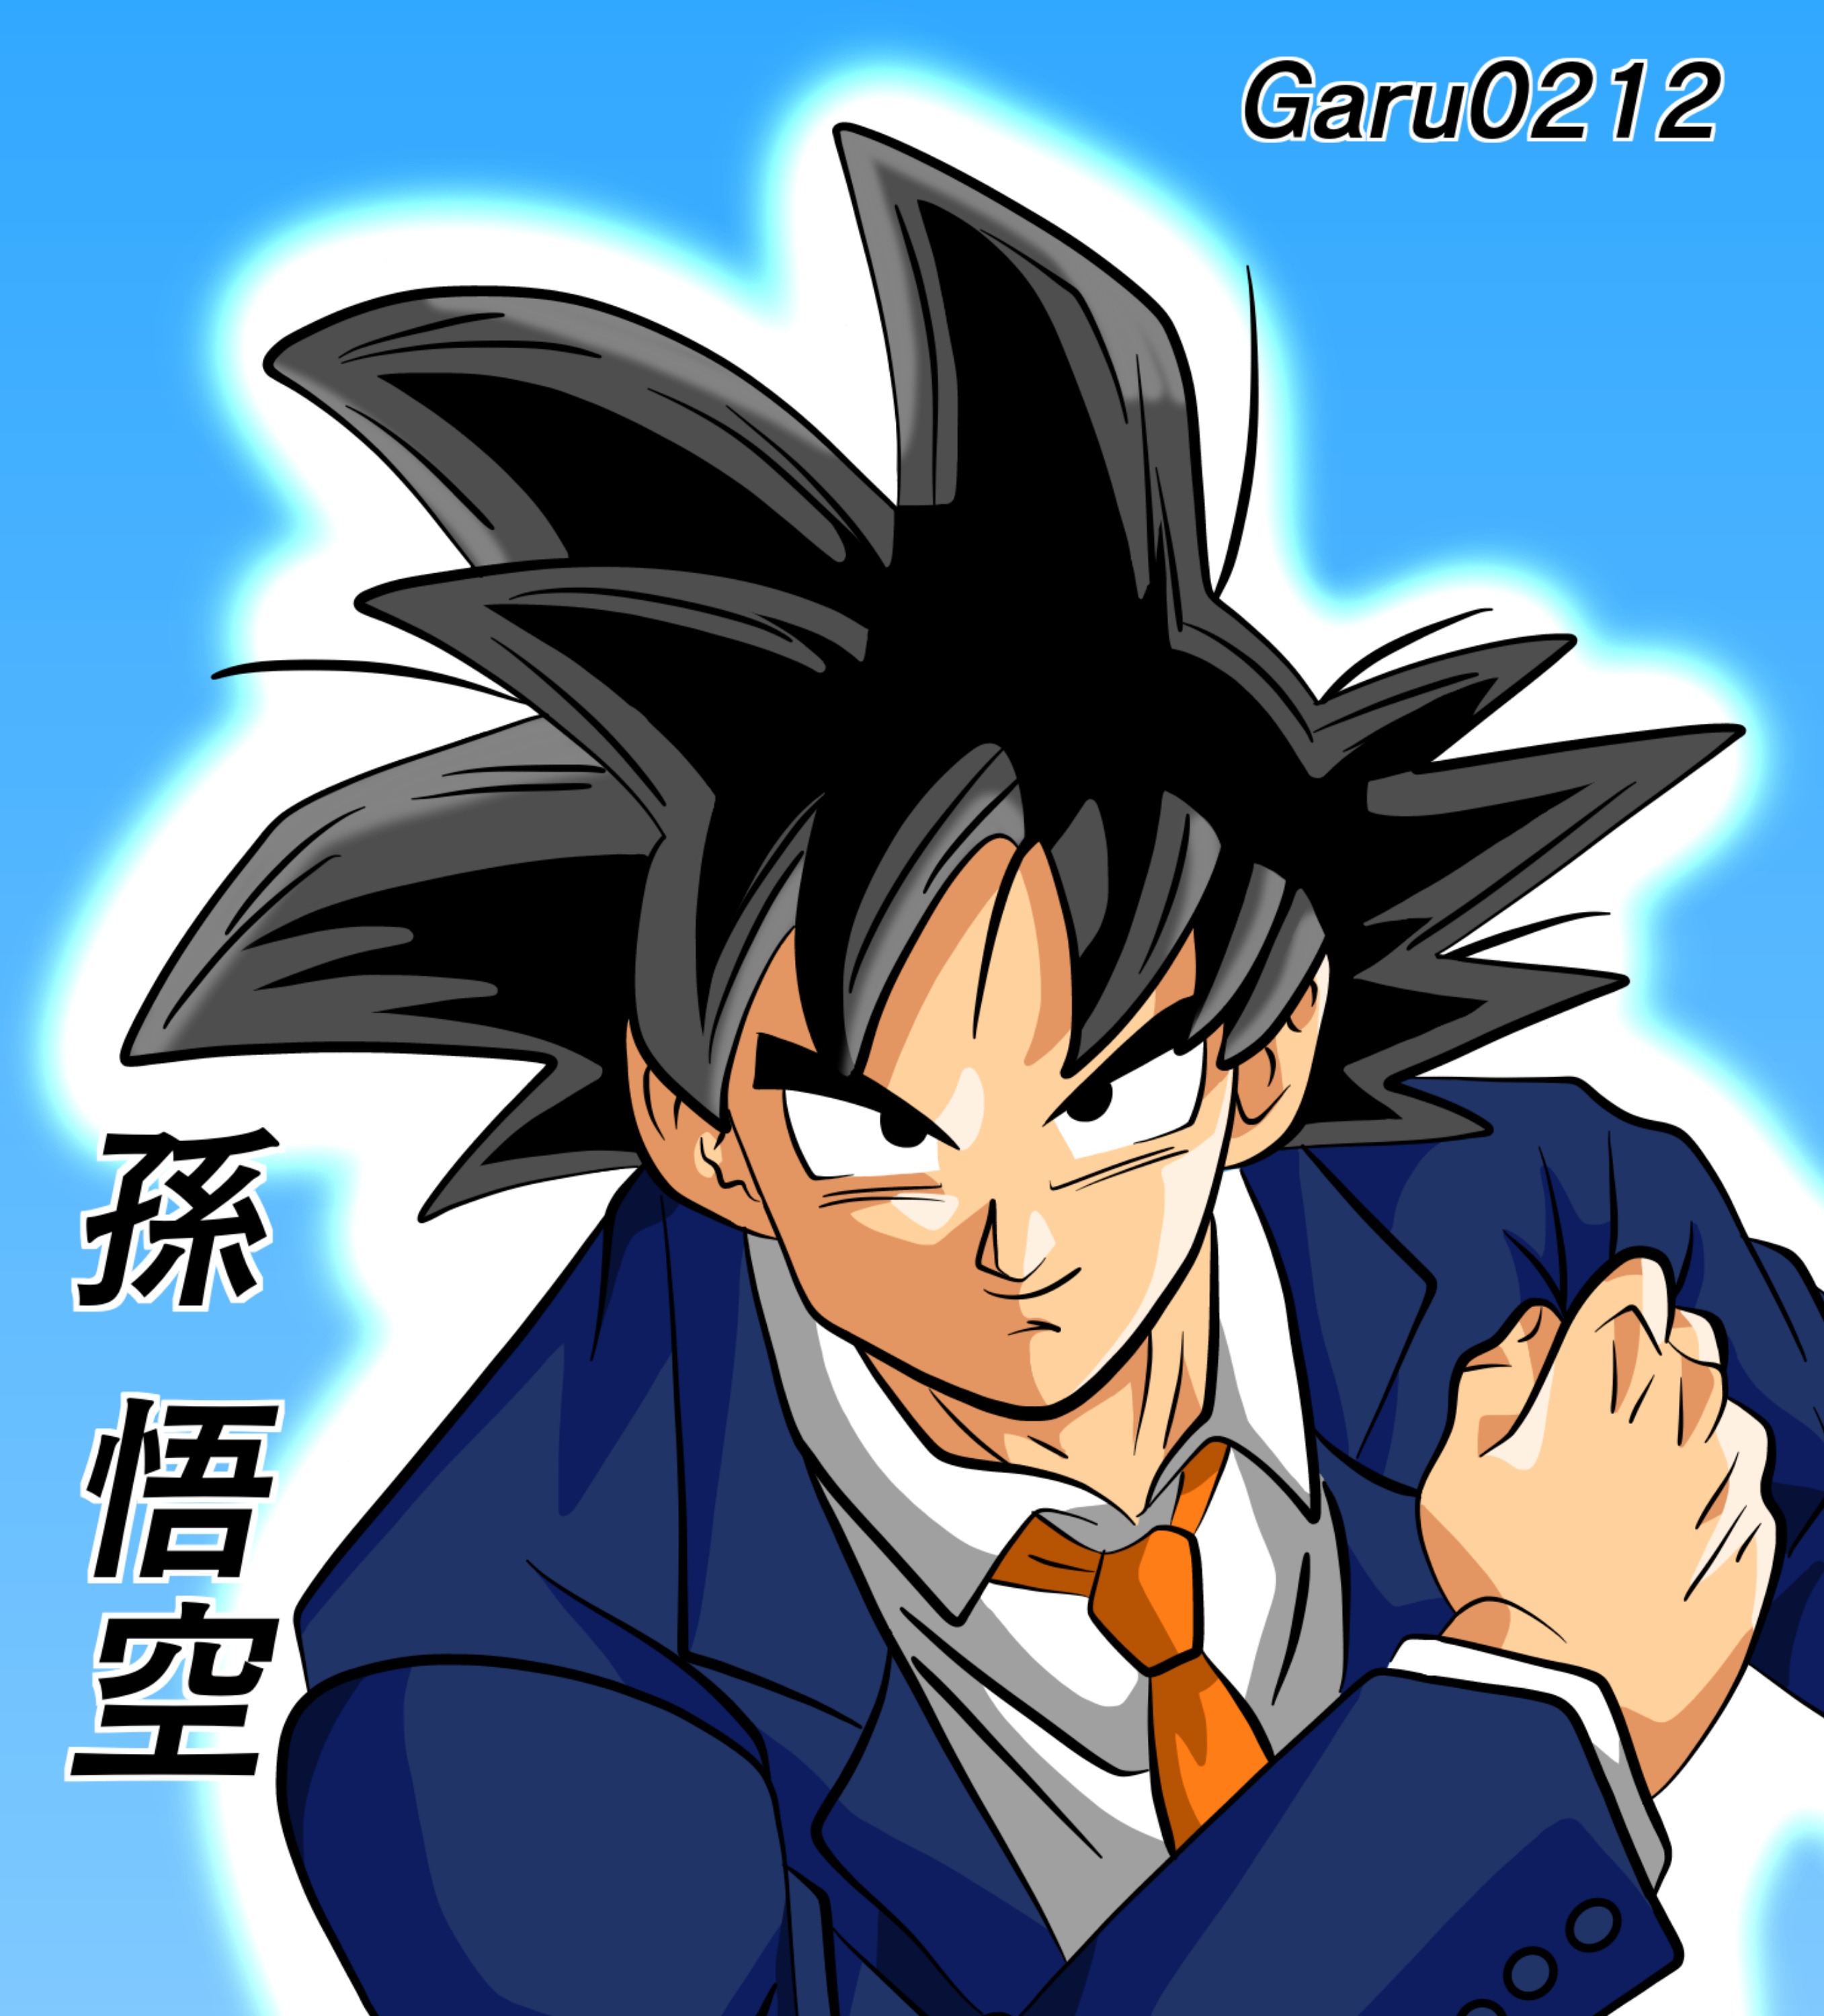 Son Goku: Supervivencia Empresarial #4 by garu0212 on DeviantArt